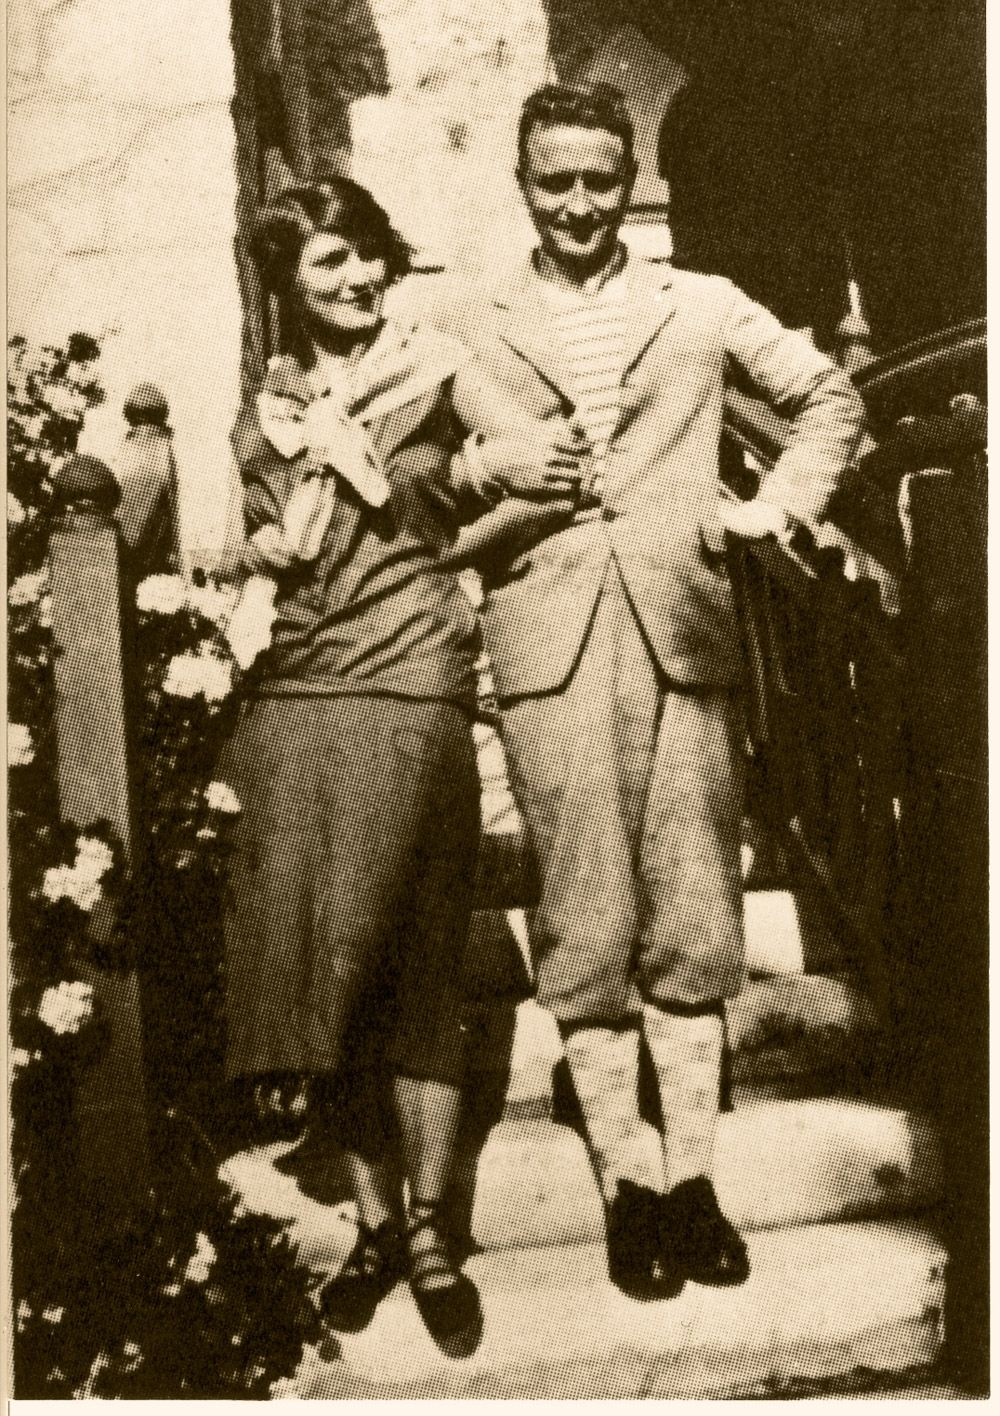 F. Scott and Zelda Fitzgerald